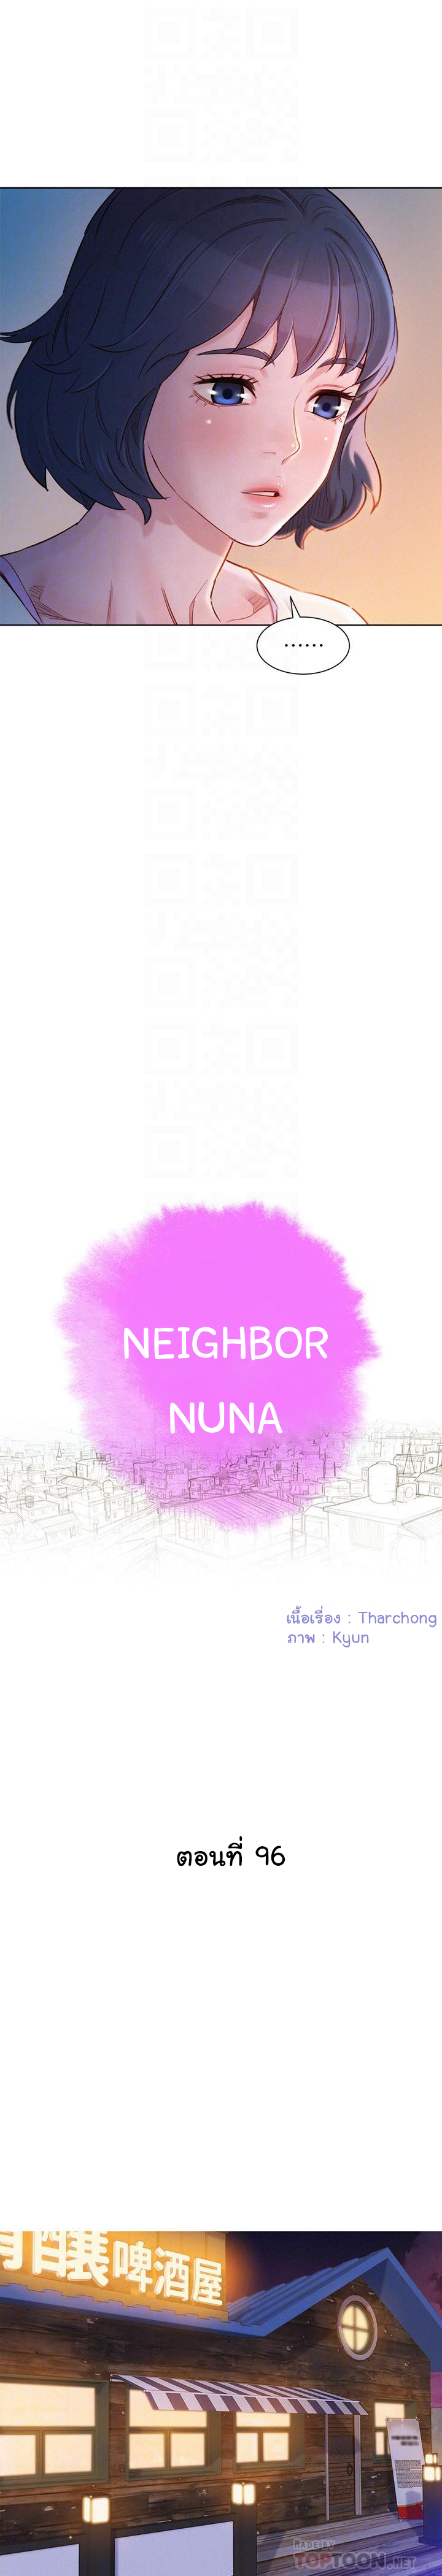 Sister Neighbors 96 (4)